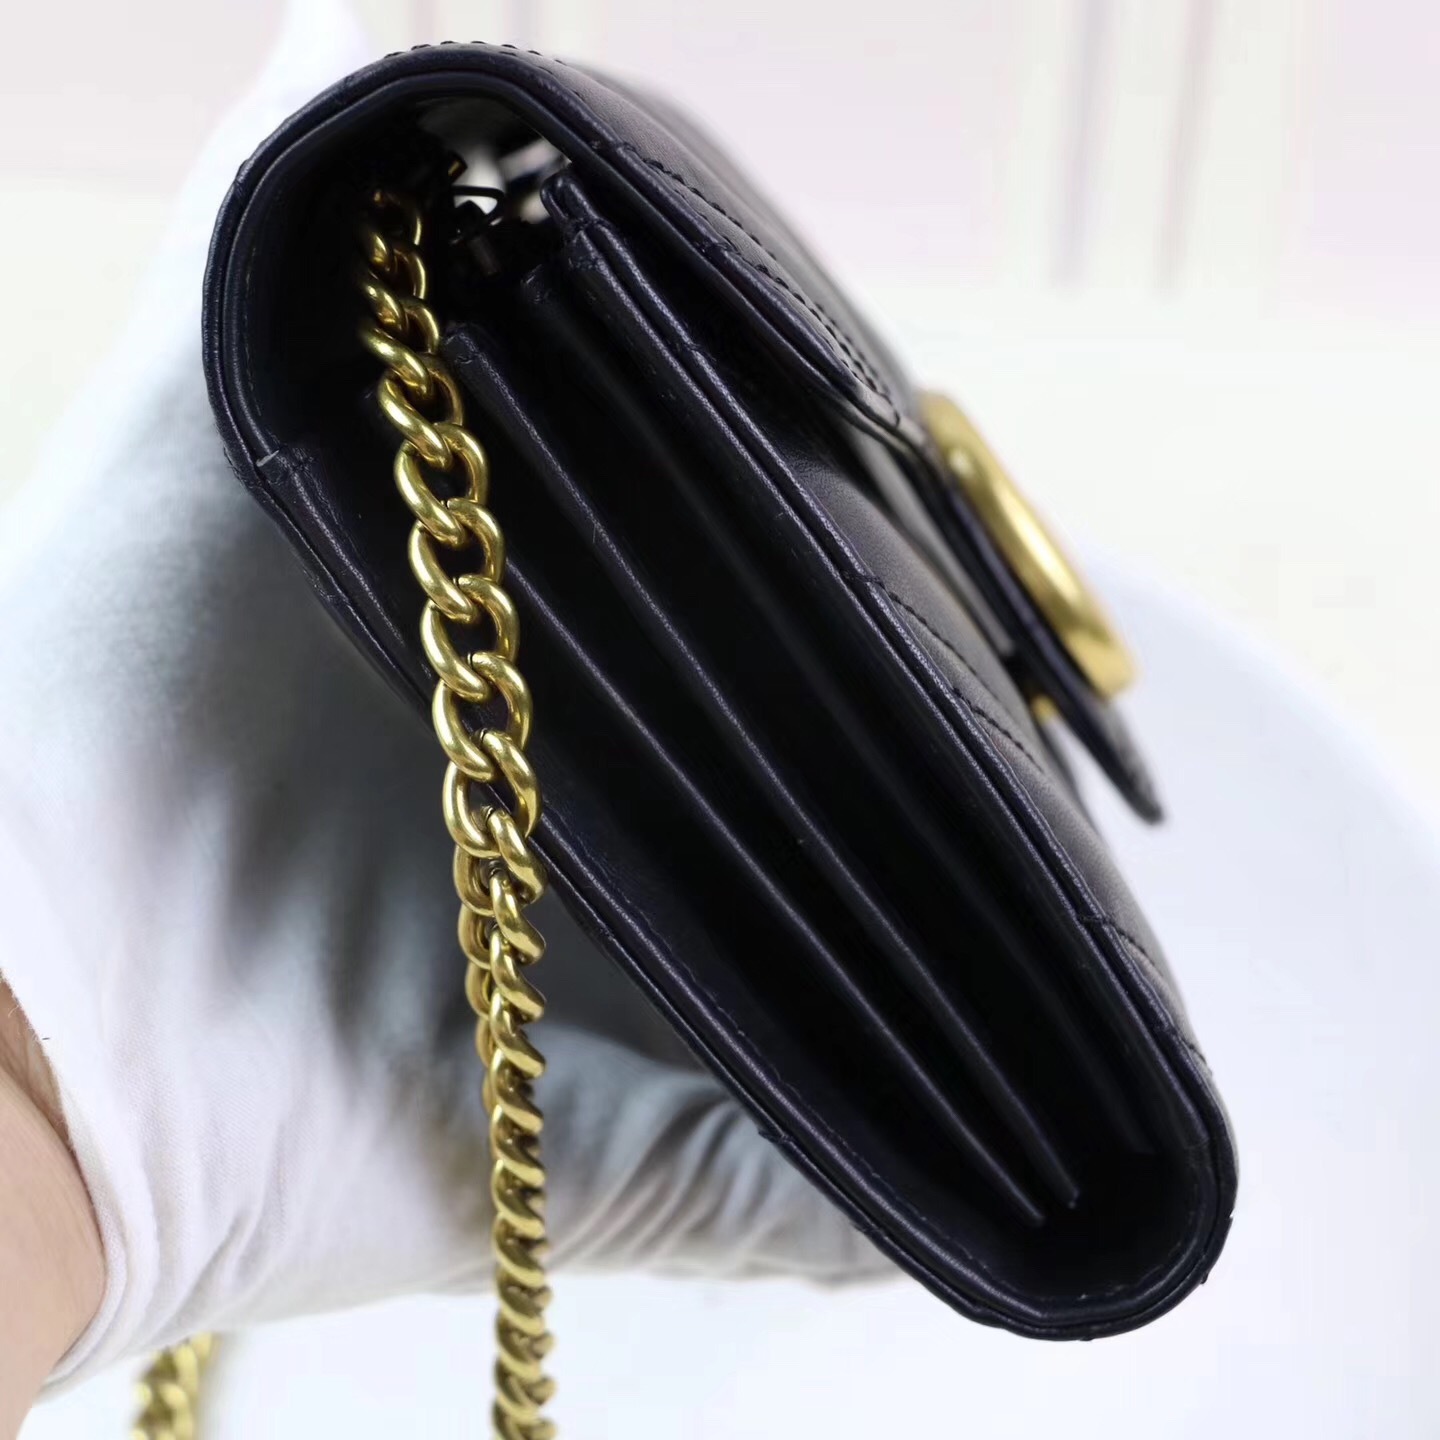 Designer gucci purses cheap gg marmont matelassé mini bag wallet on chain small crossbody black ...